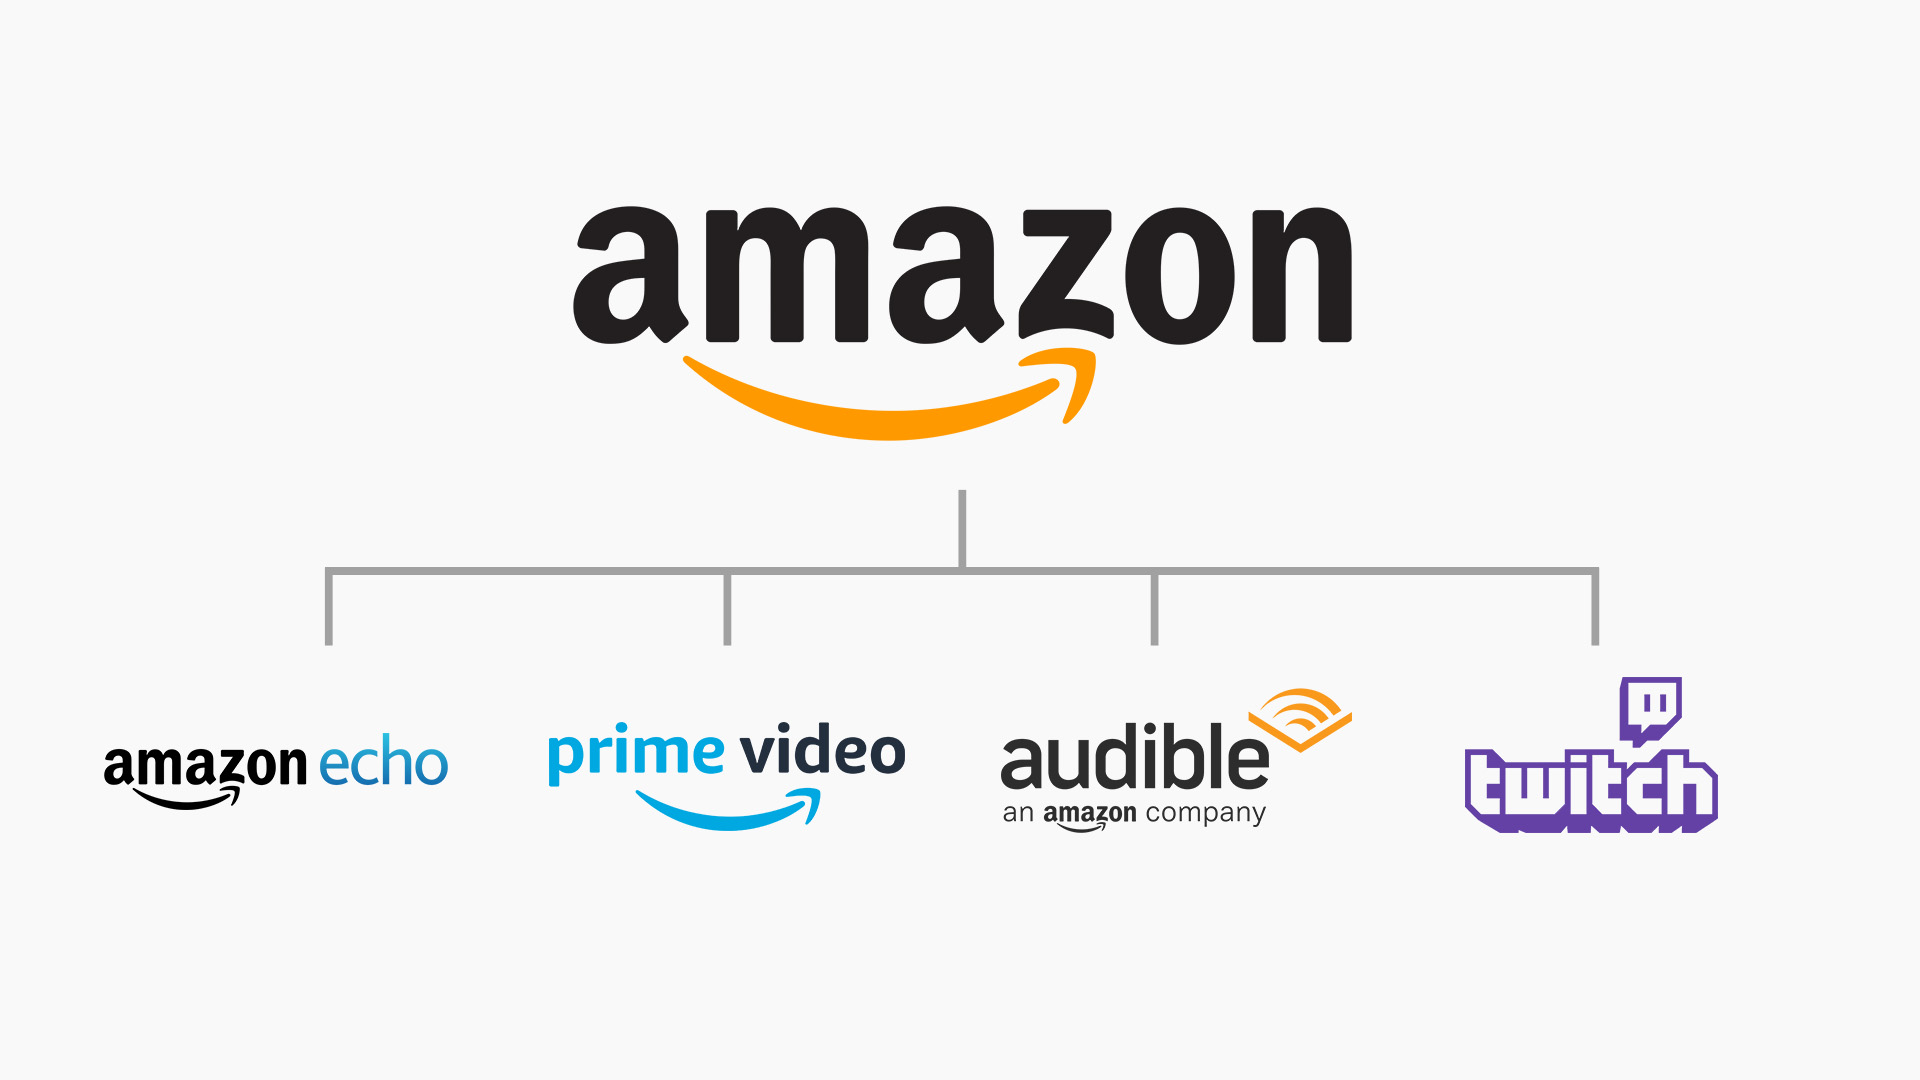 Amazon Utilizes House of Brands Hybrid Model Shown in Diagram